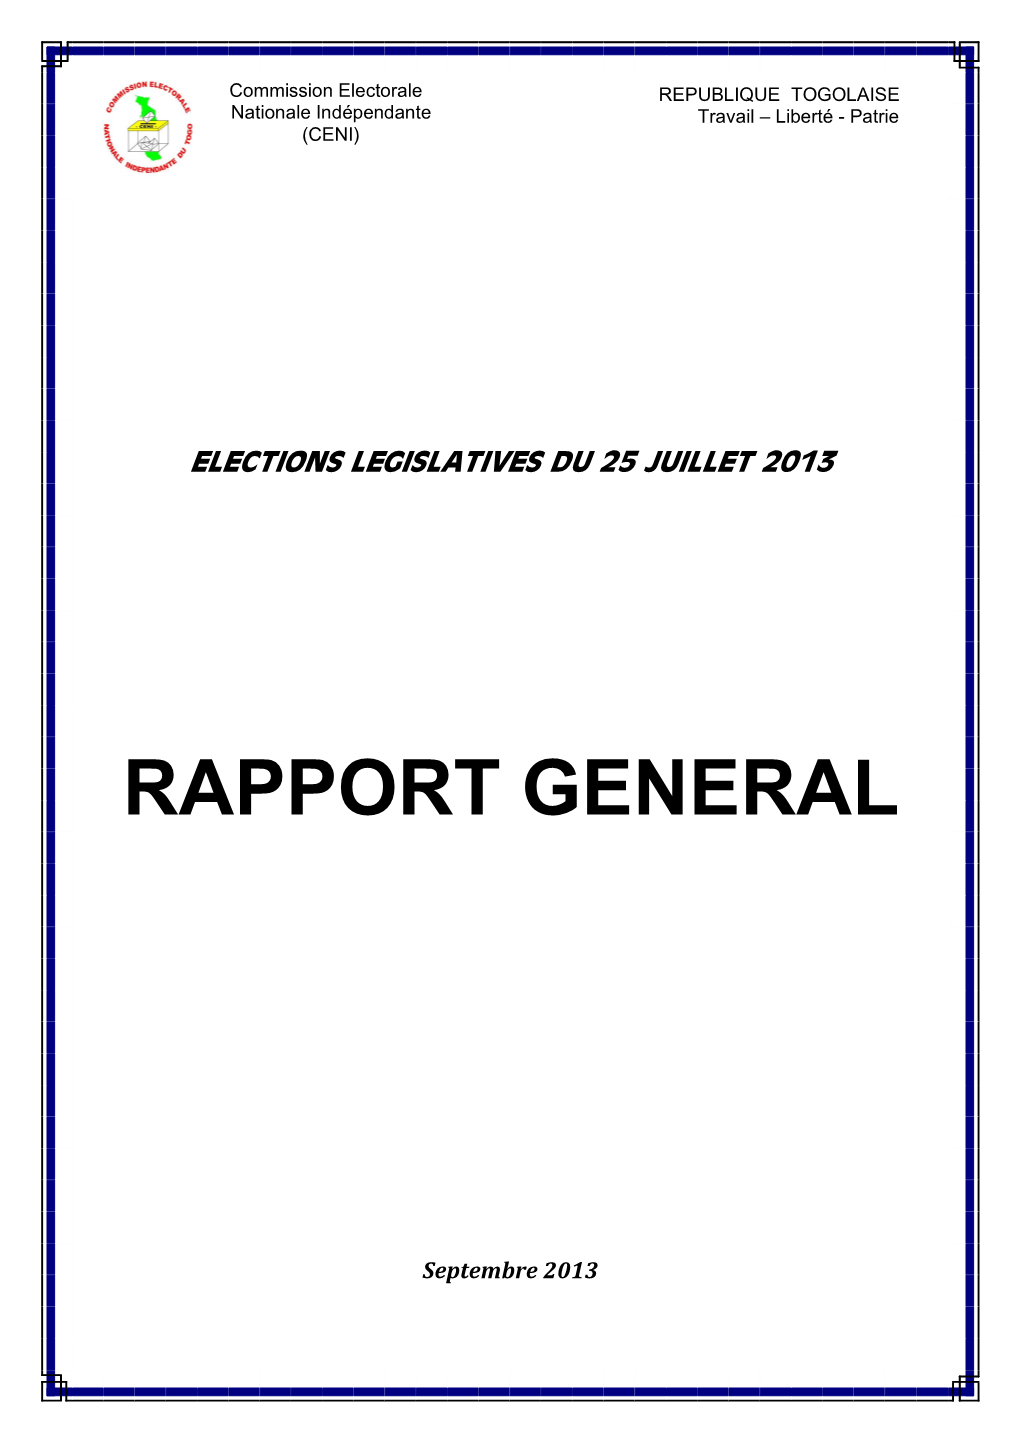 Rapport General